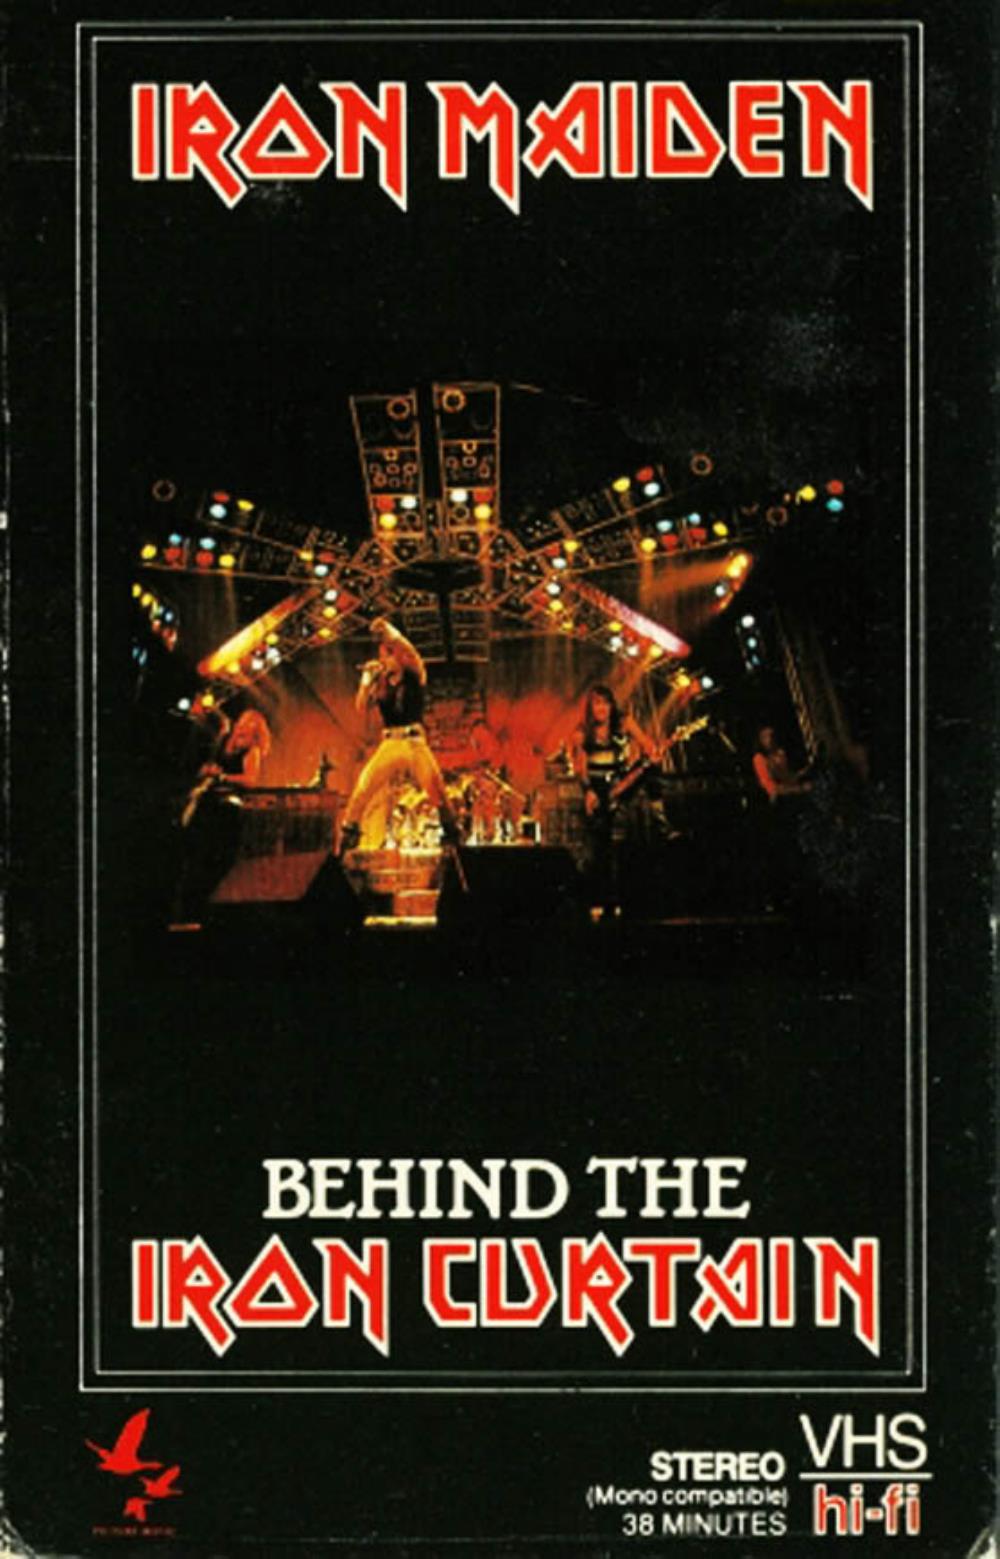 Iron Maiden Behind the Iron Curtain album cover